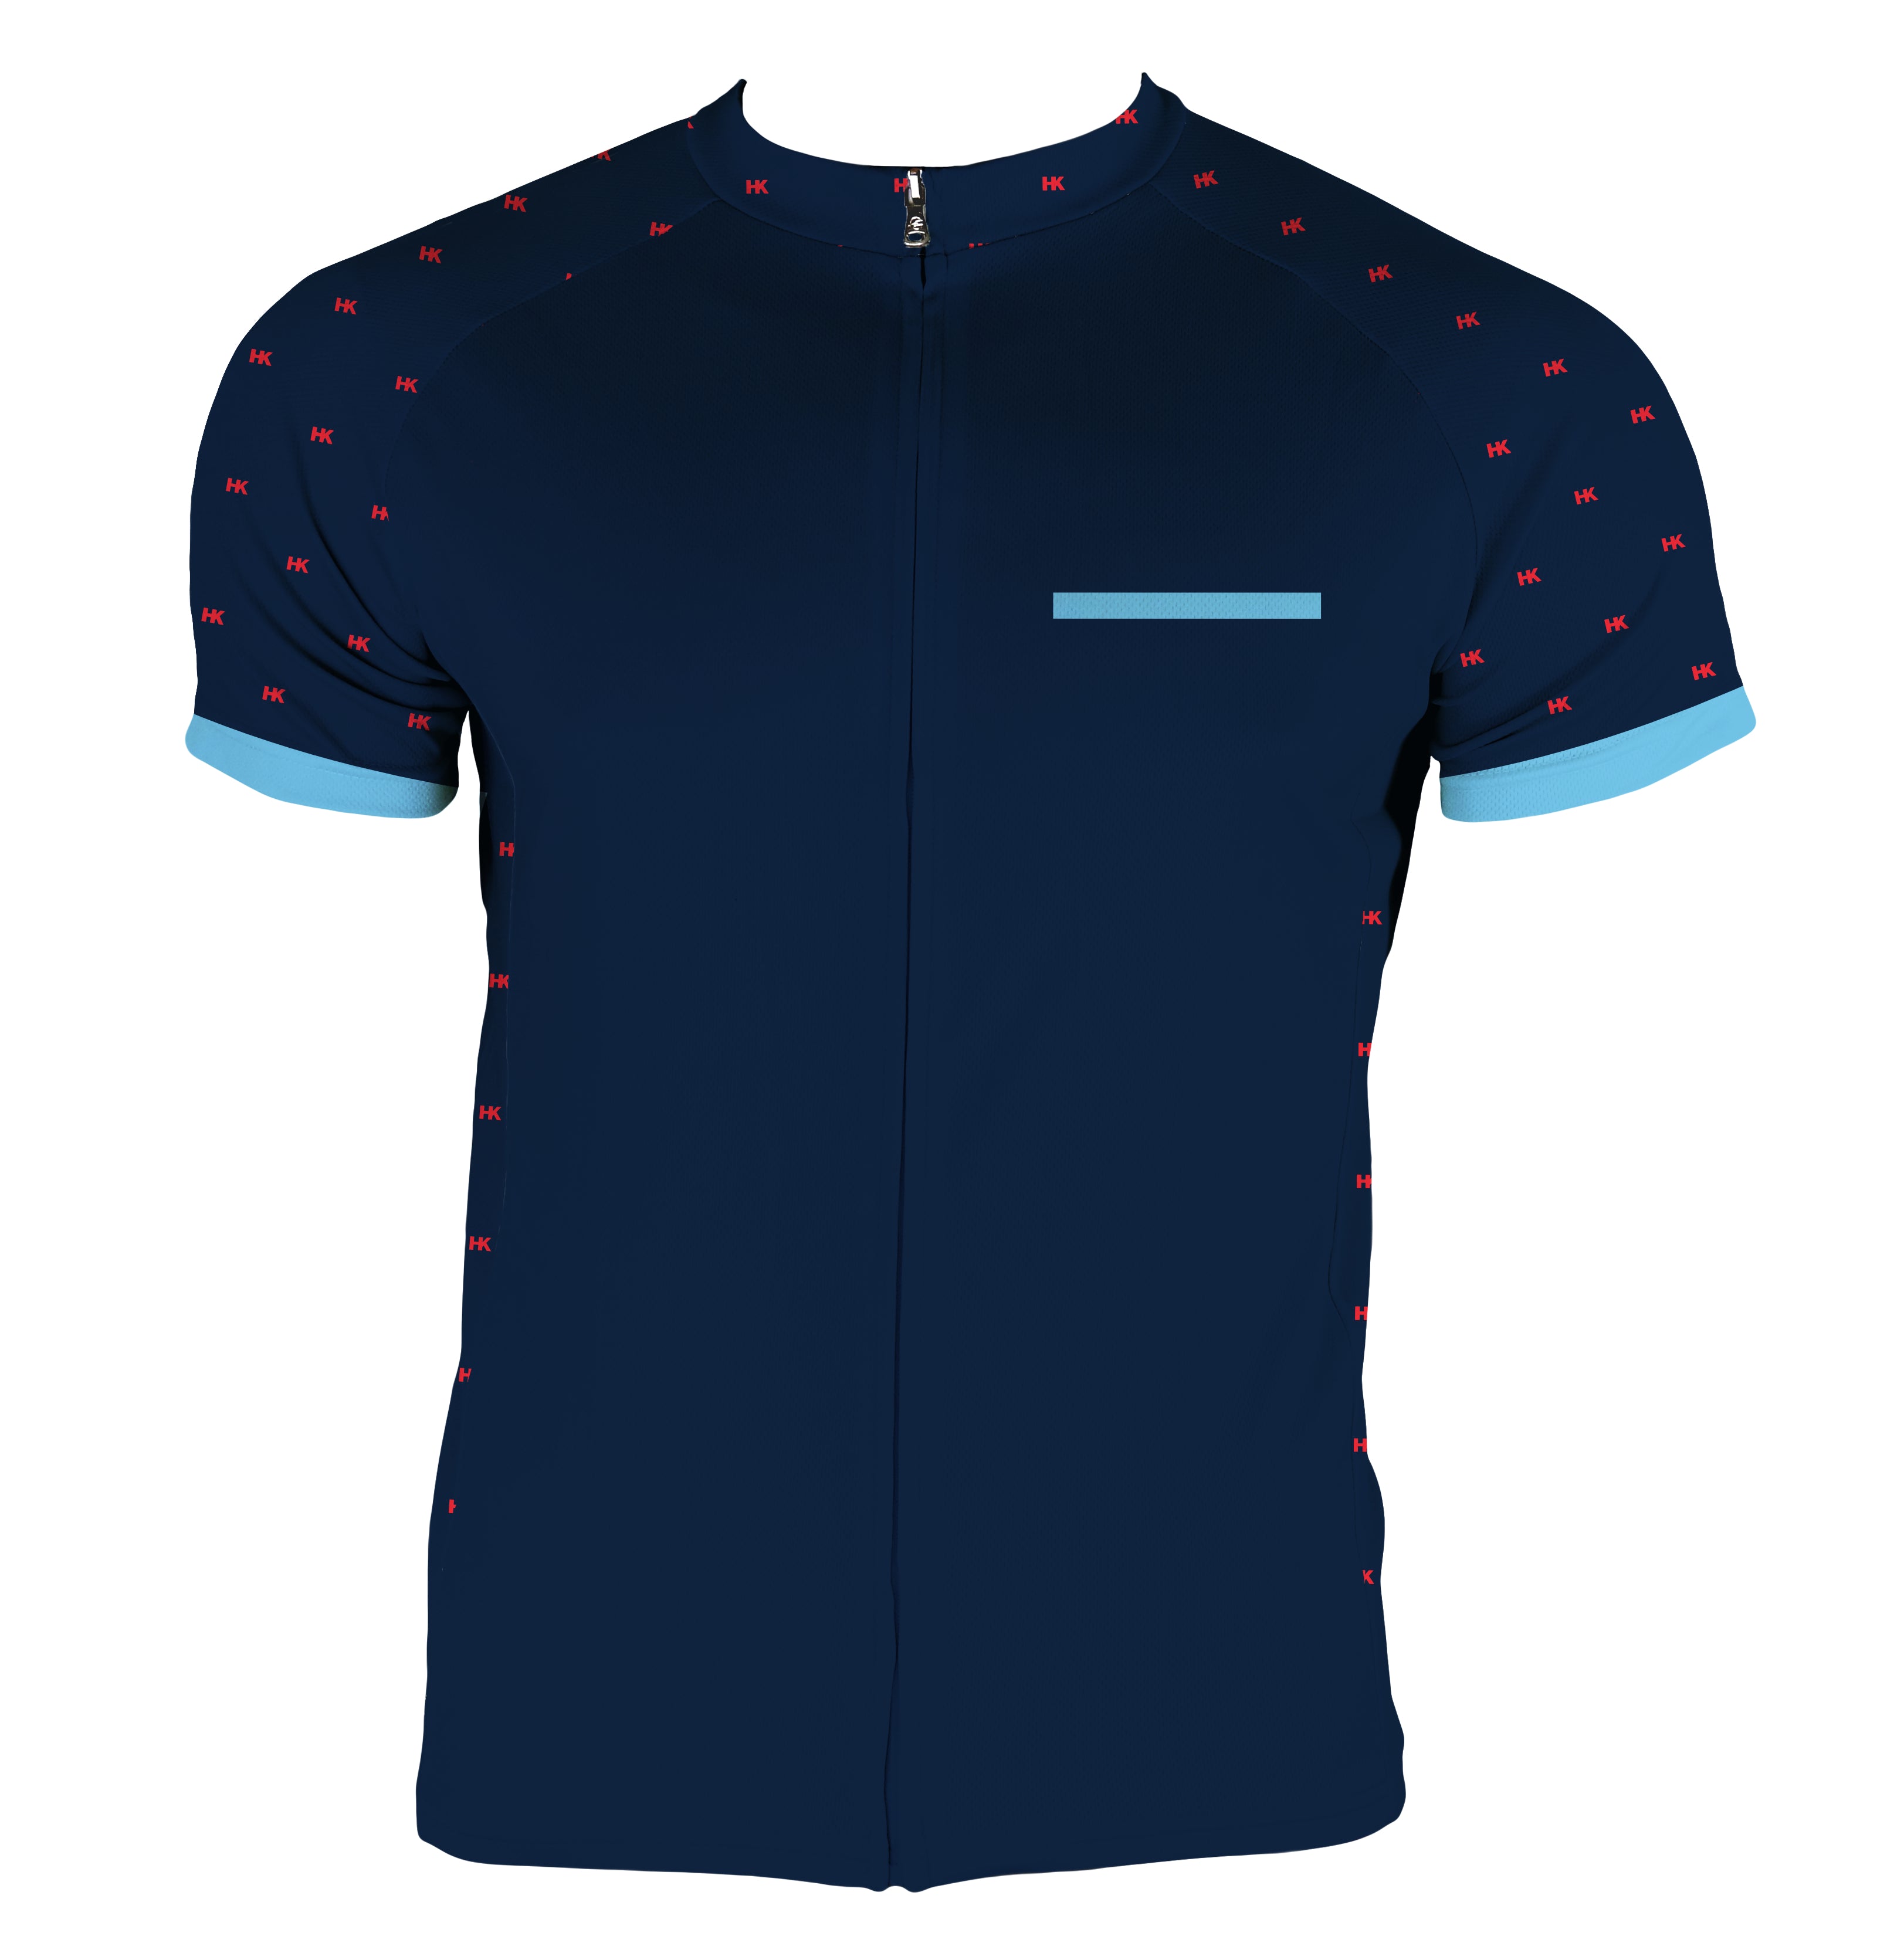 Dress Blue Men's Club-Cut Cycling Jersey by Hill Killer